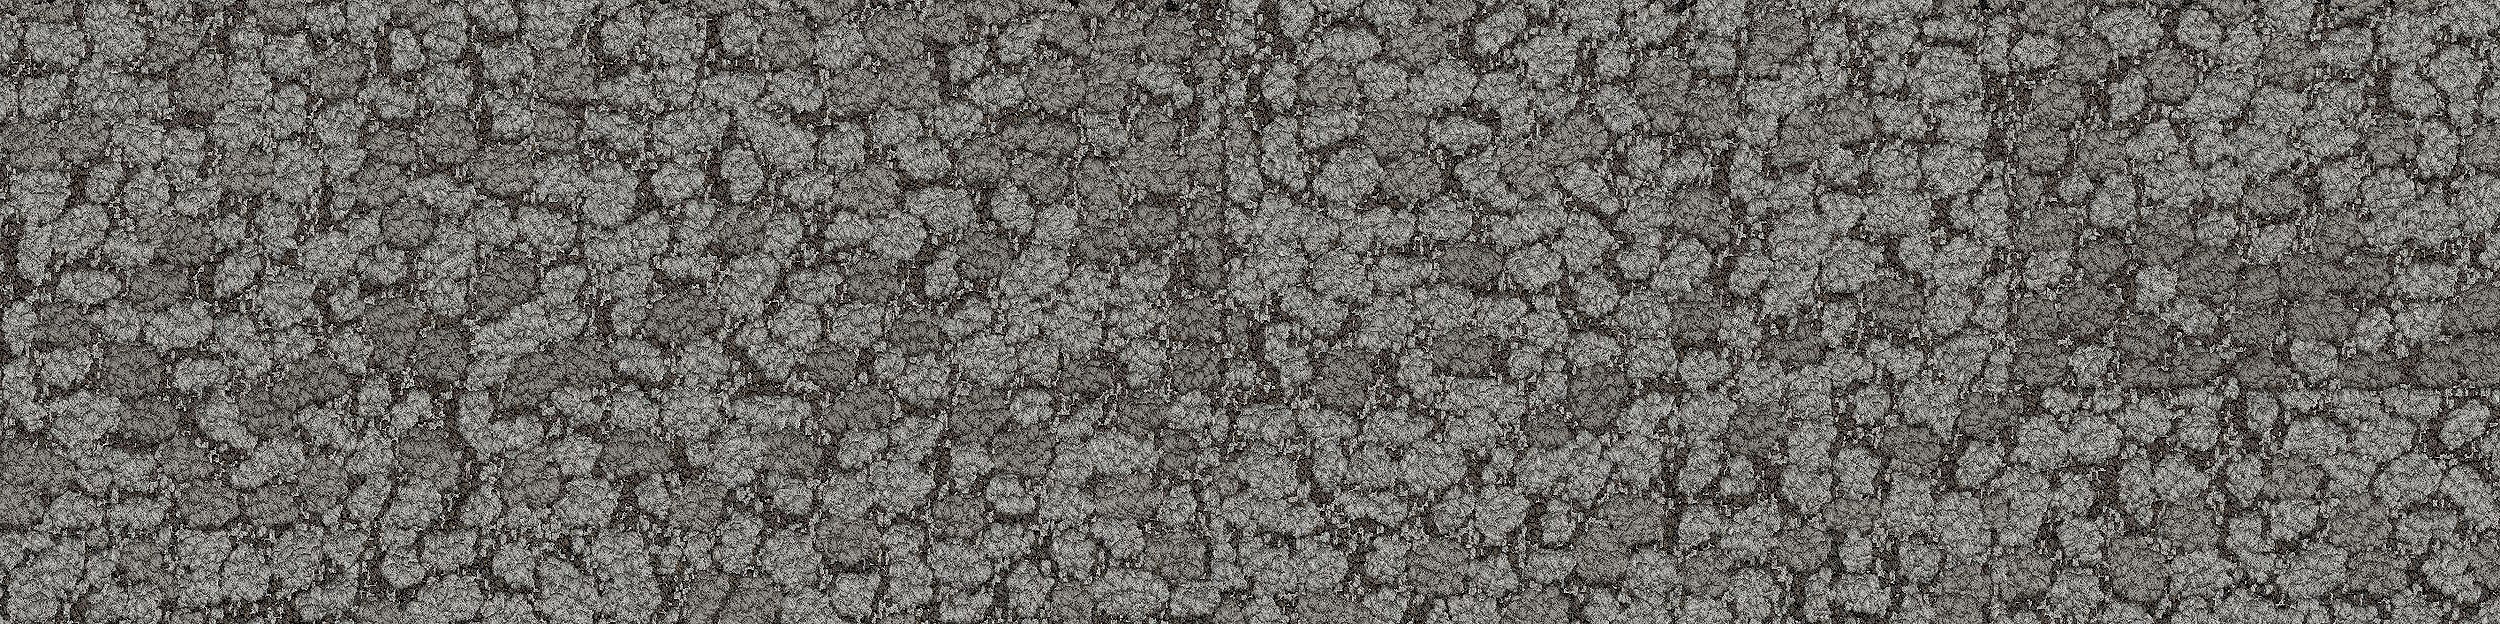 HN840 Carpet Tile In Nickel afbeeldingnummer 13